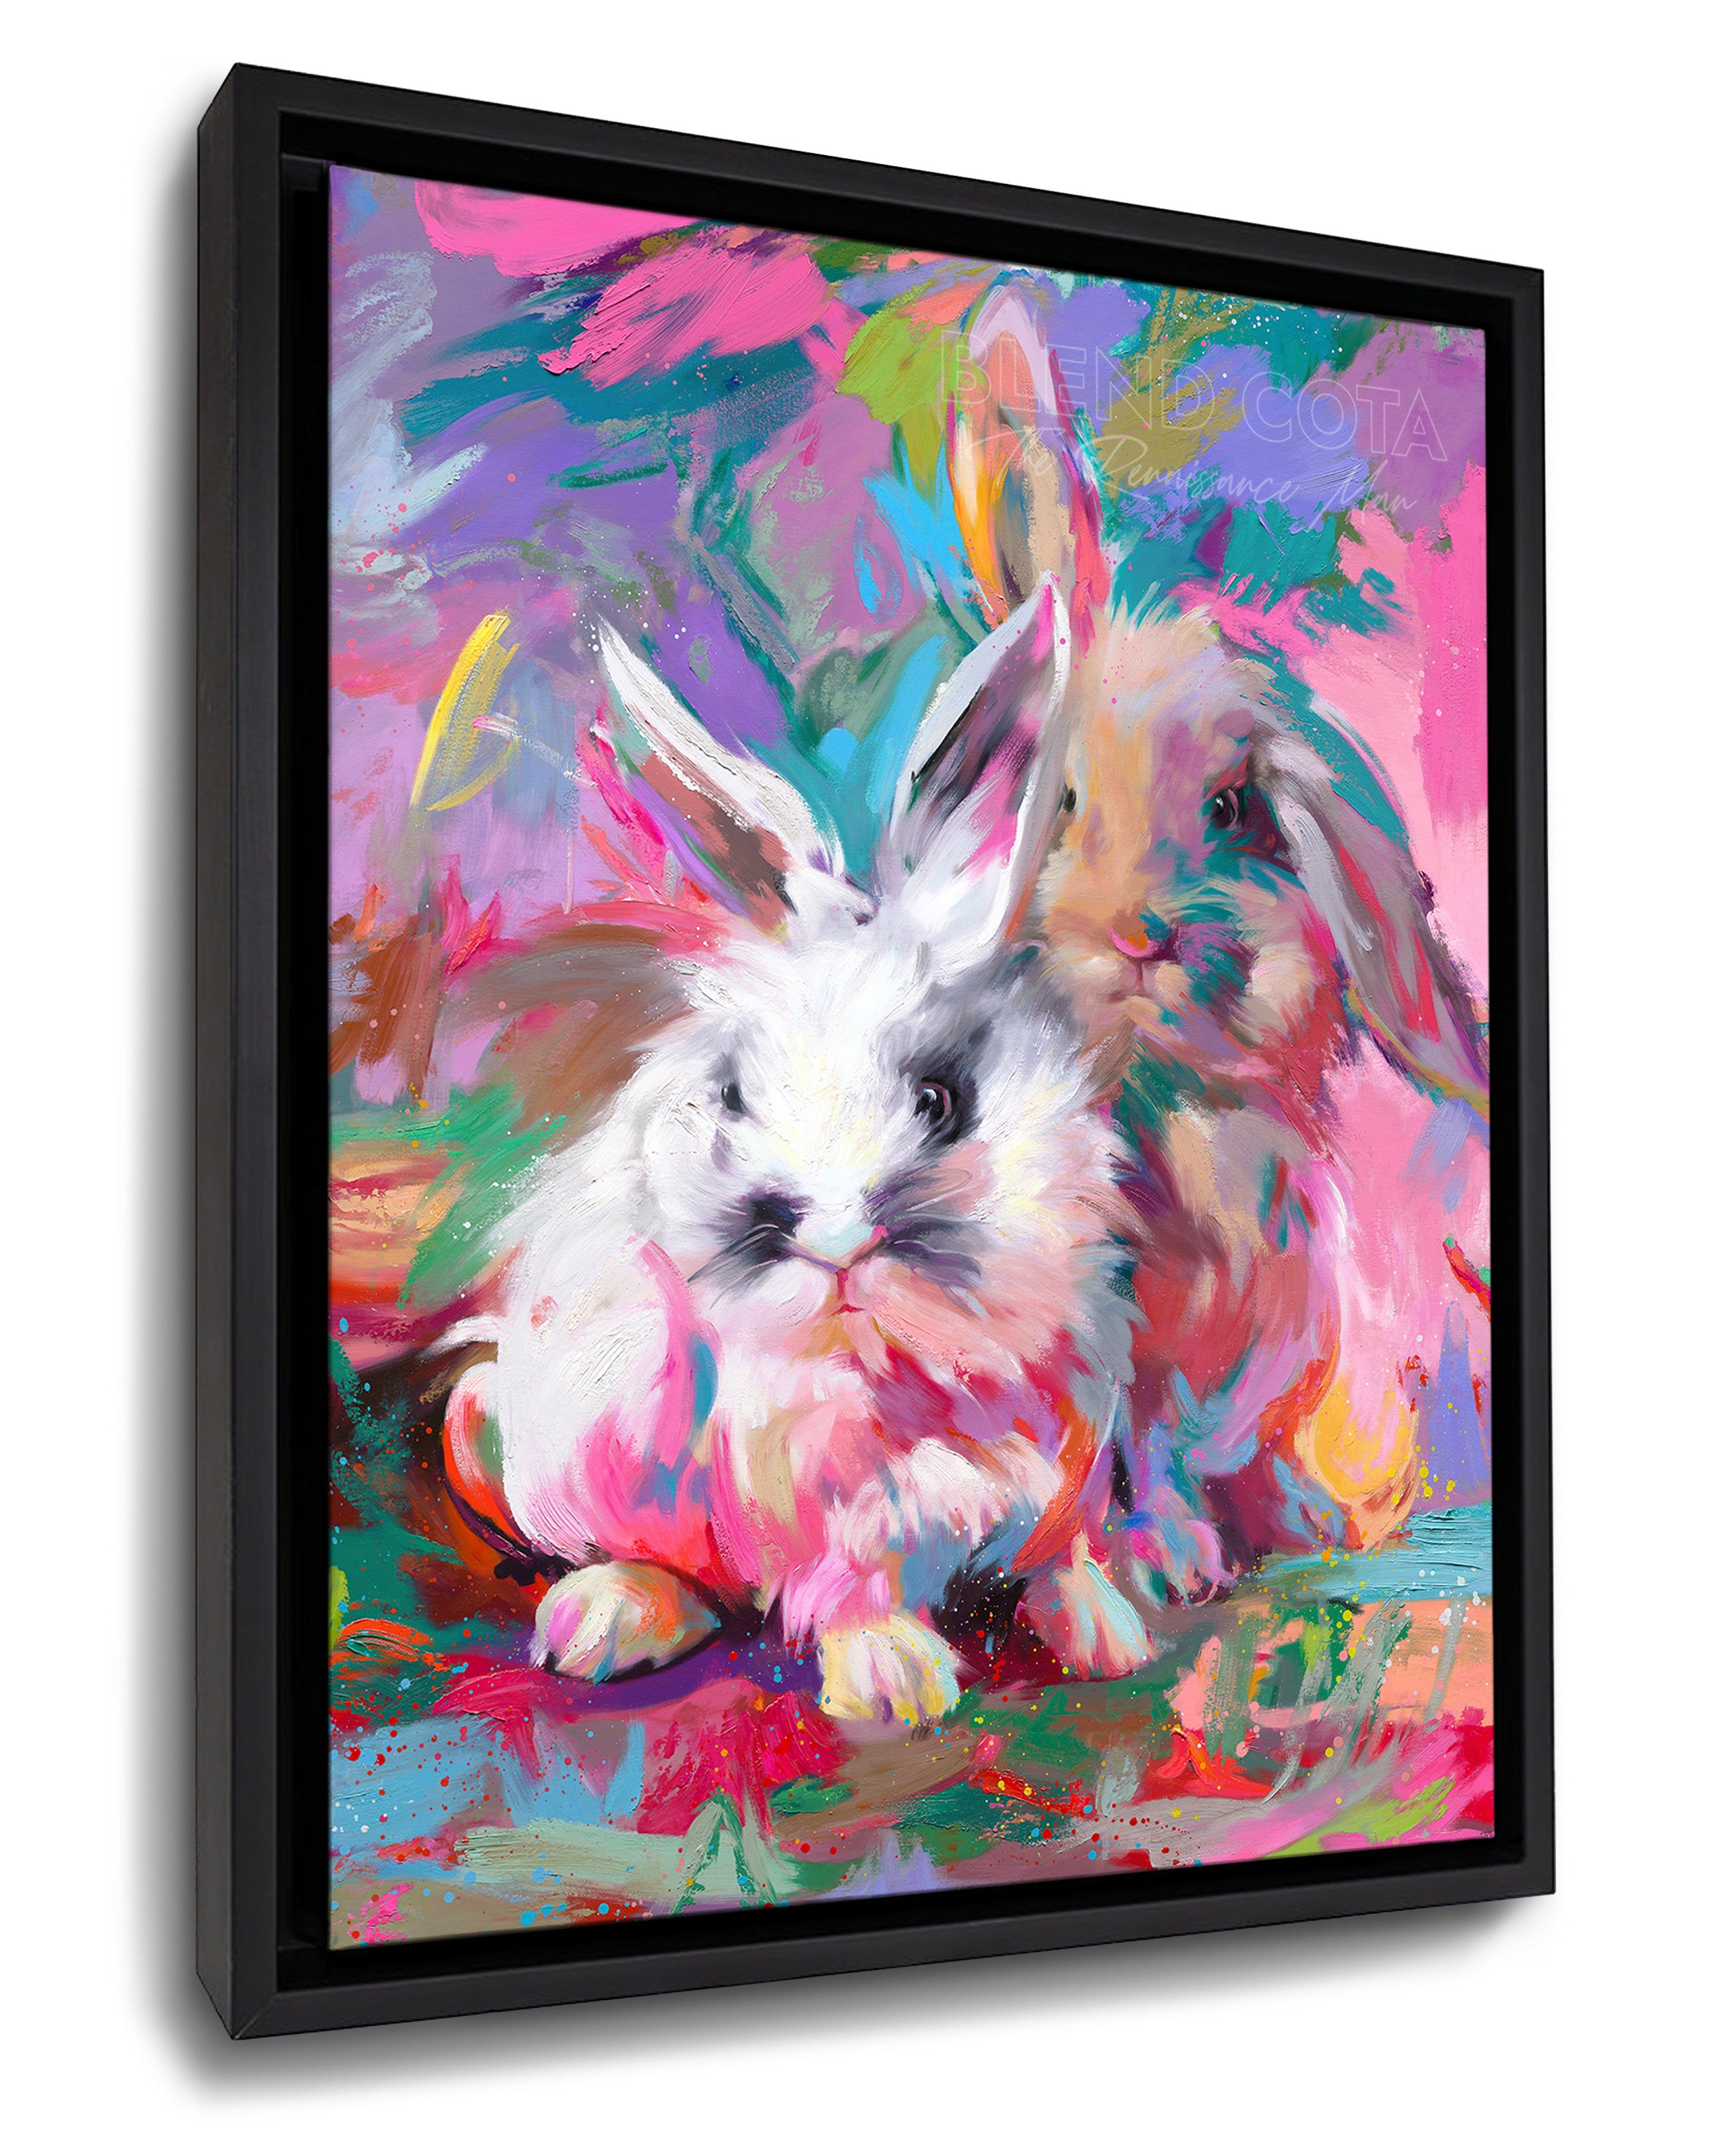 Fluffy Buns - Blend Cota Art Print Framed on Canvas - Blend Cota Studios